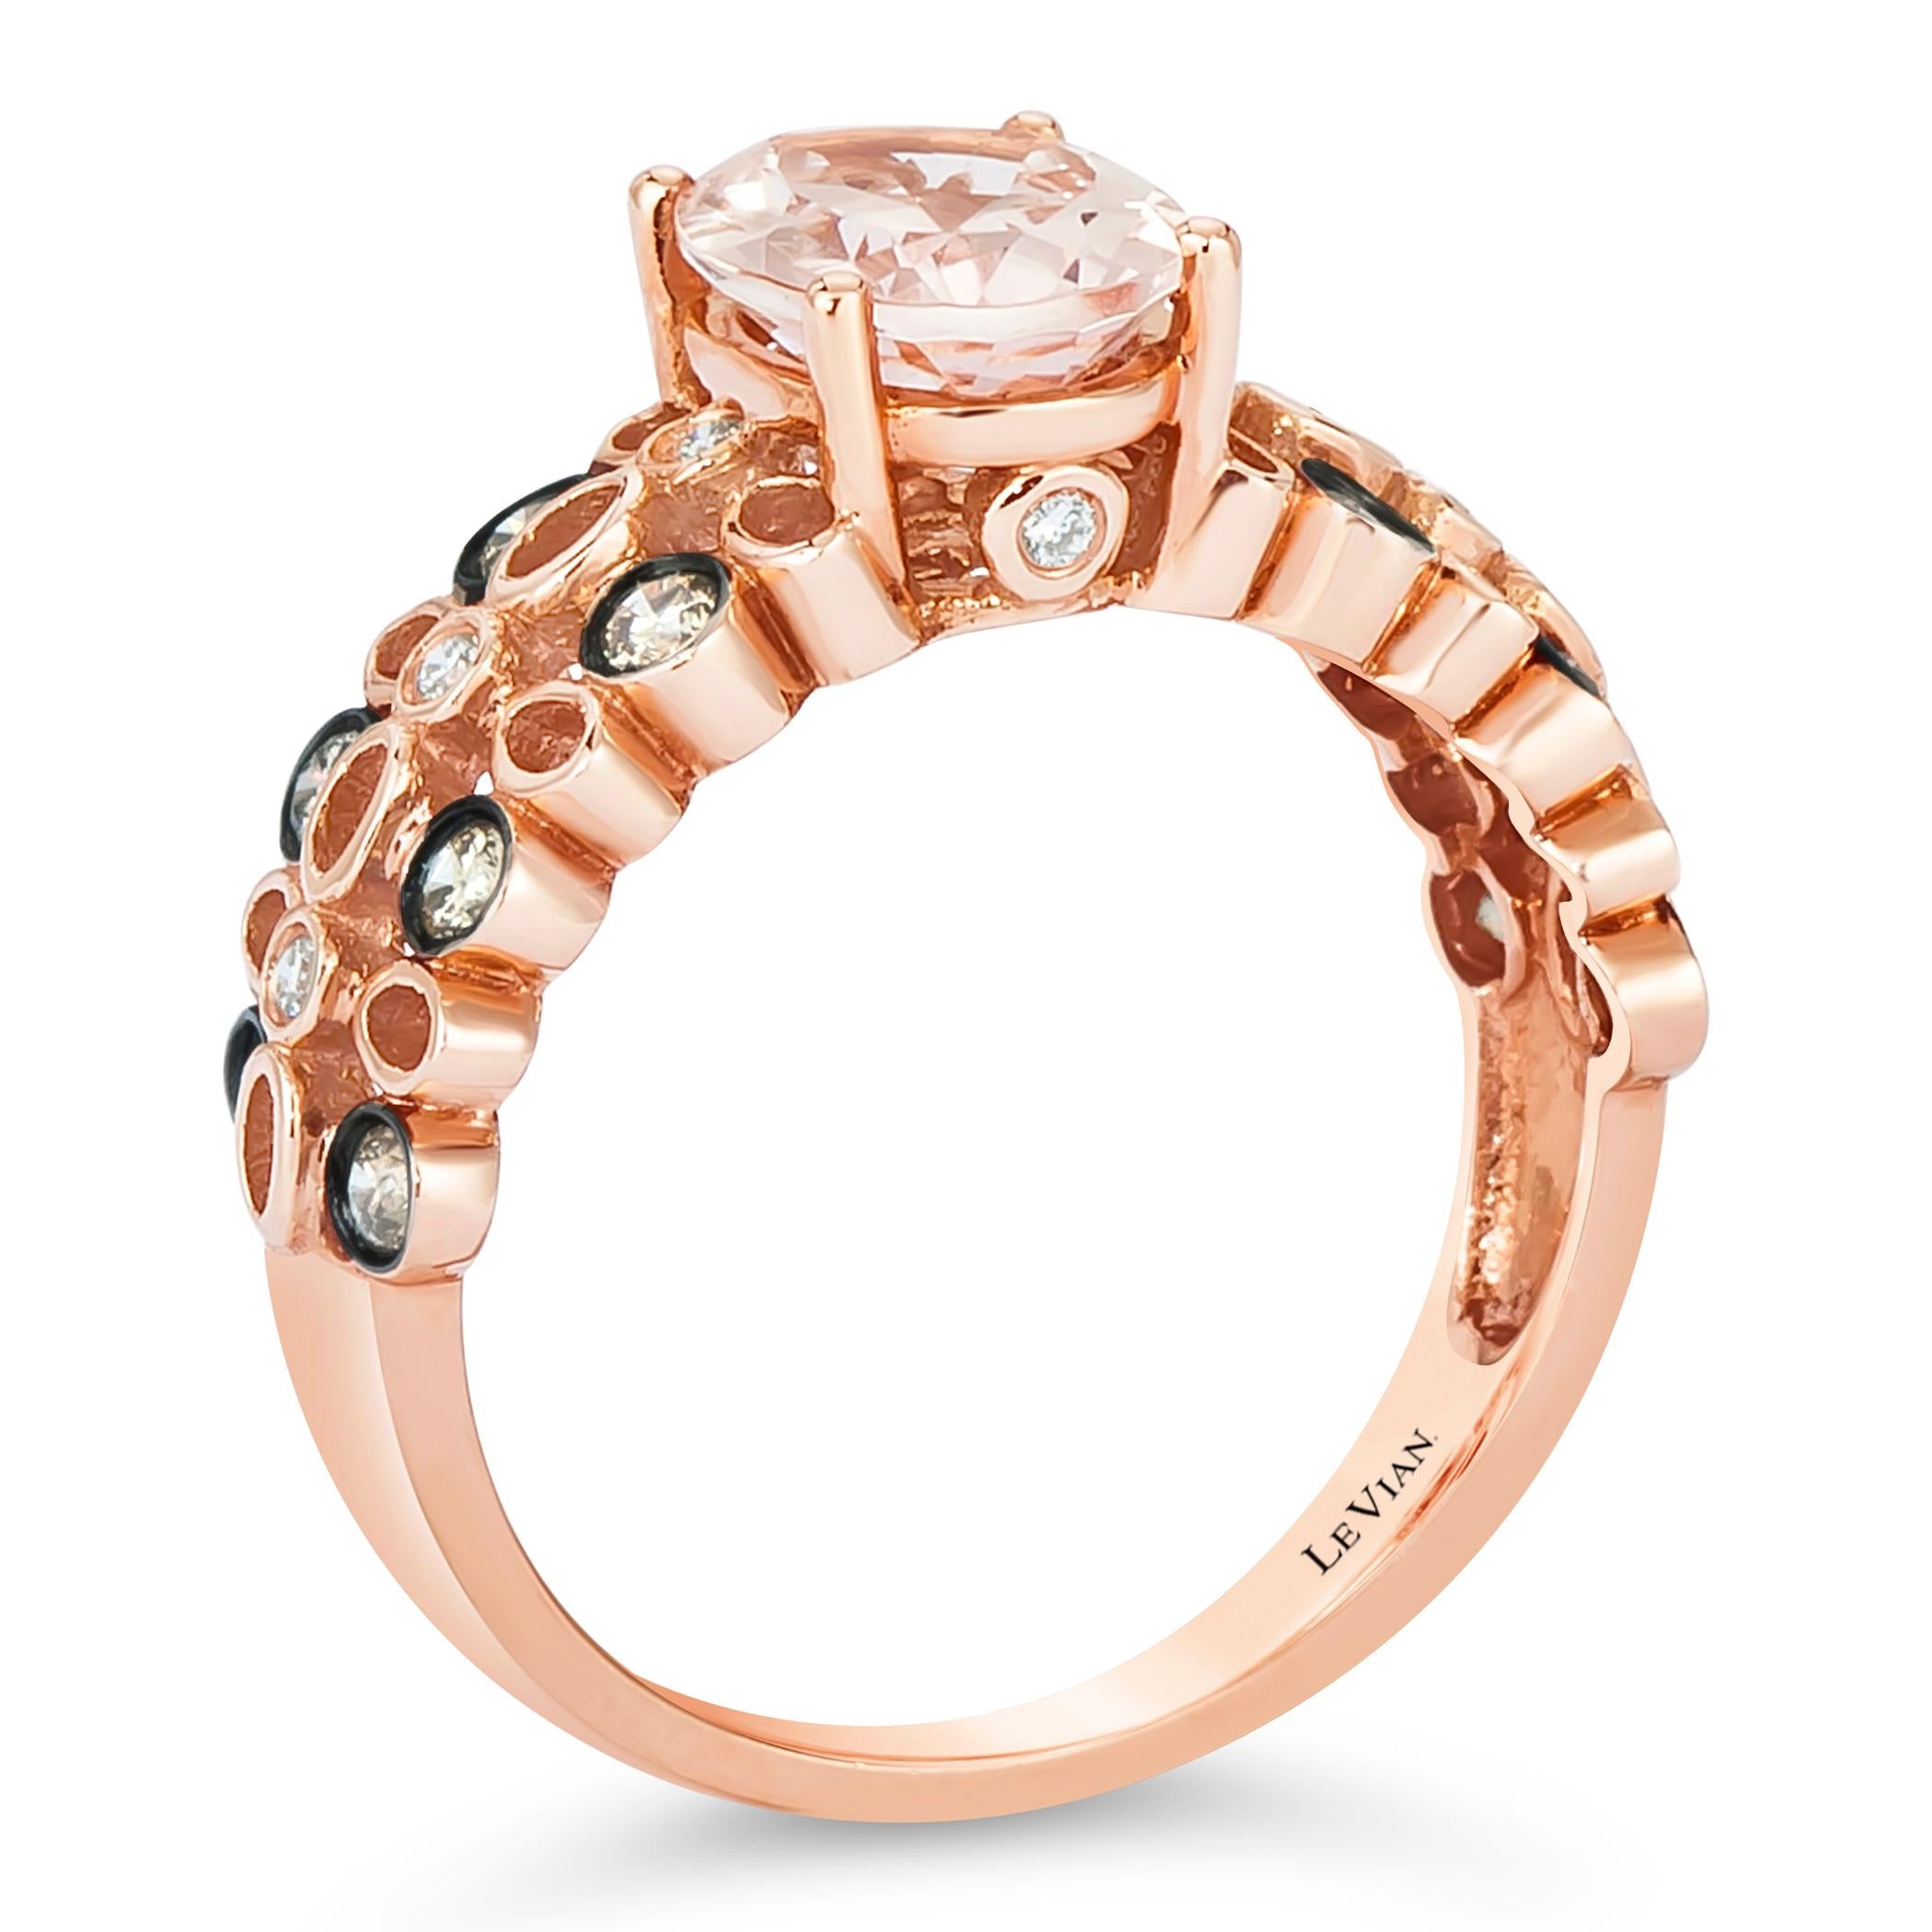 Levian 14K Rose Gold Morganite White Chocolate Diamond Engagement Ring Size 7
